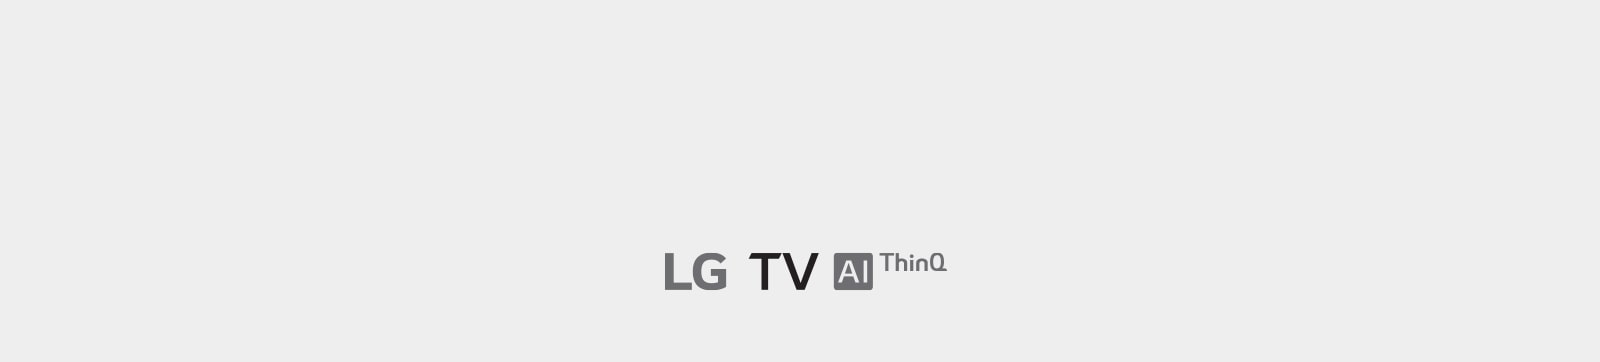 TV-AI_ThinQ_05-Desktop